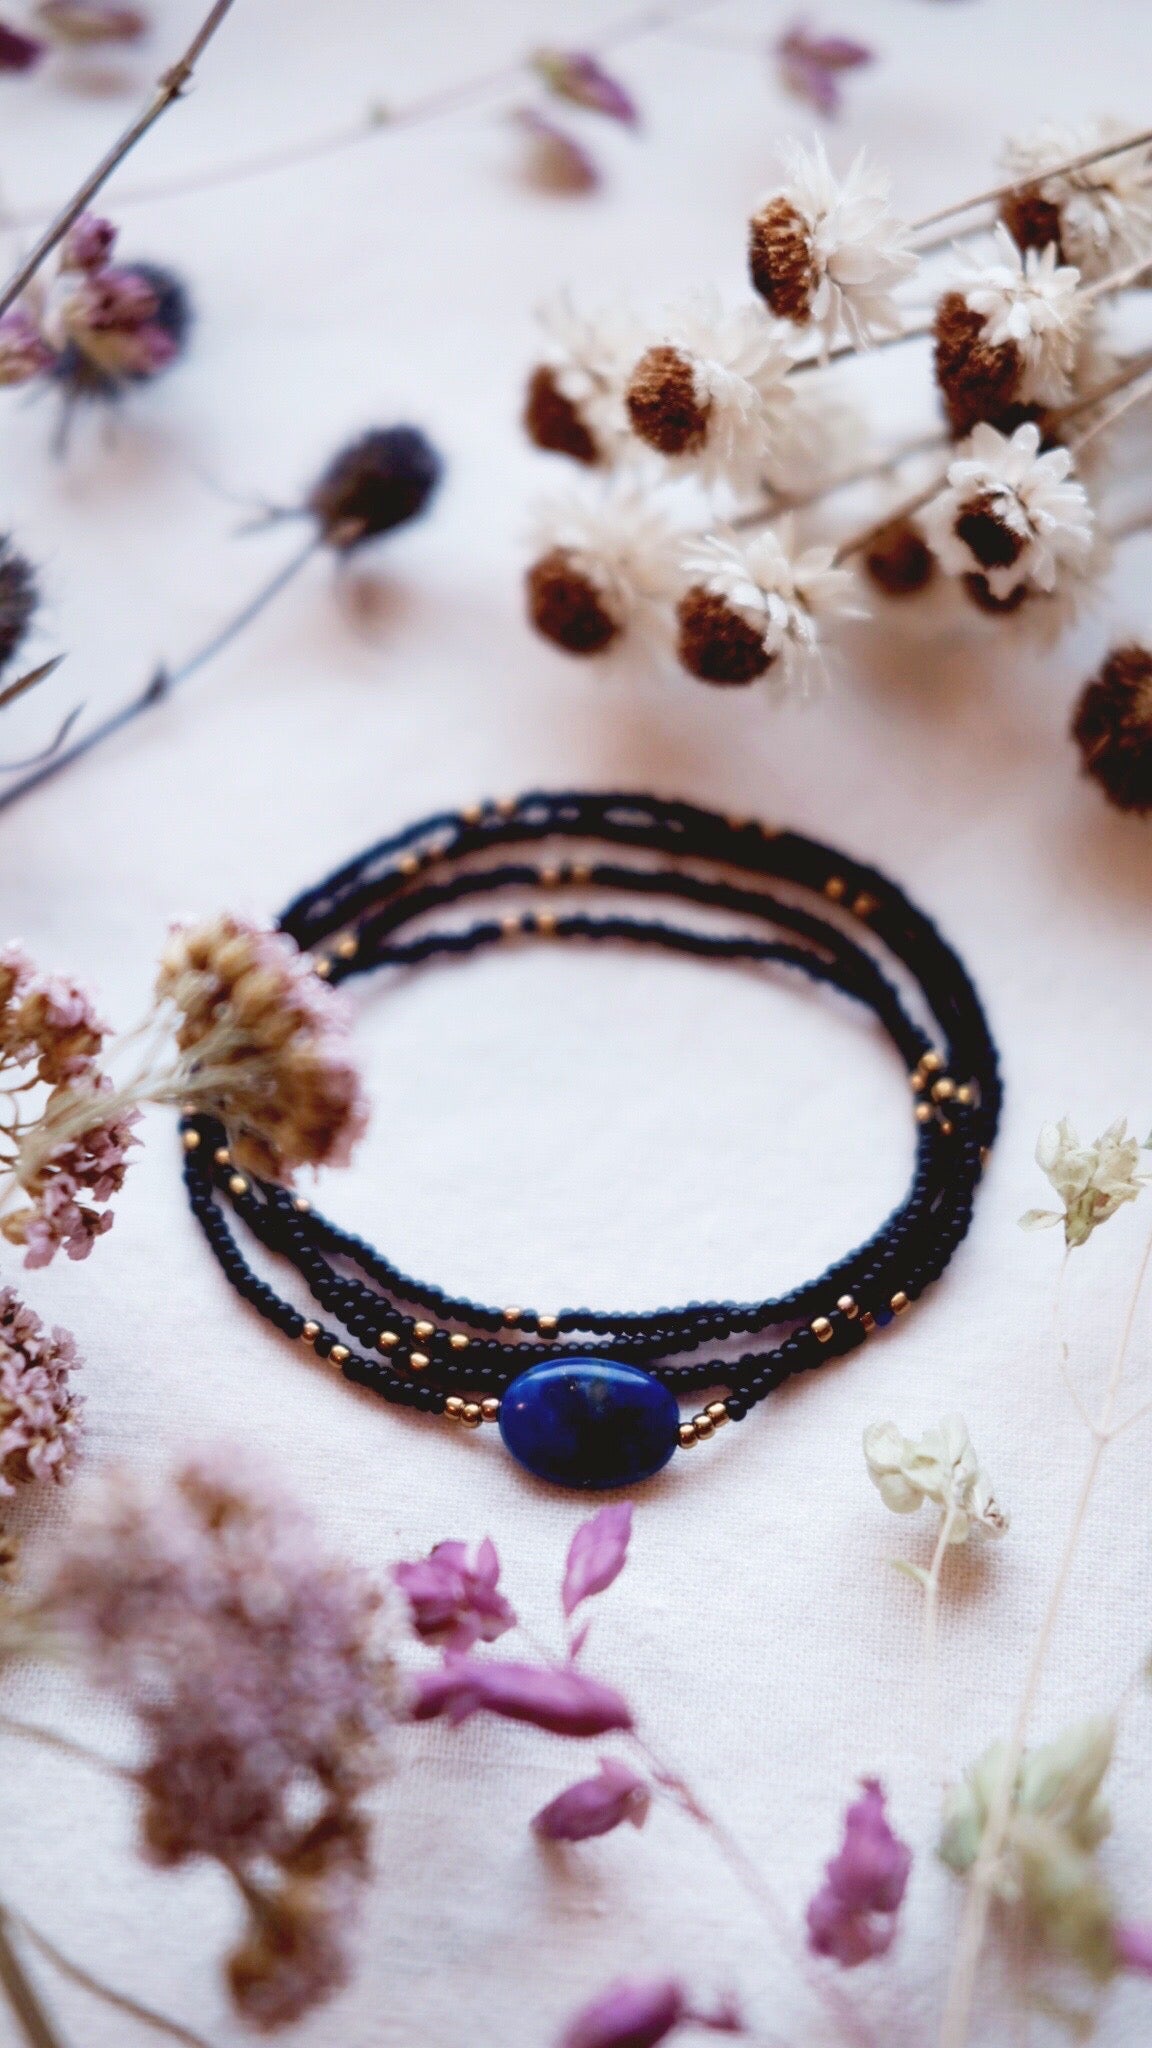 The Celestial + Lapis Lazuli gemstone necklace